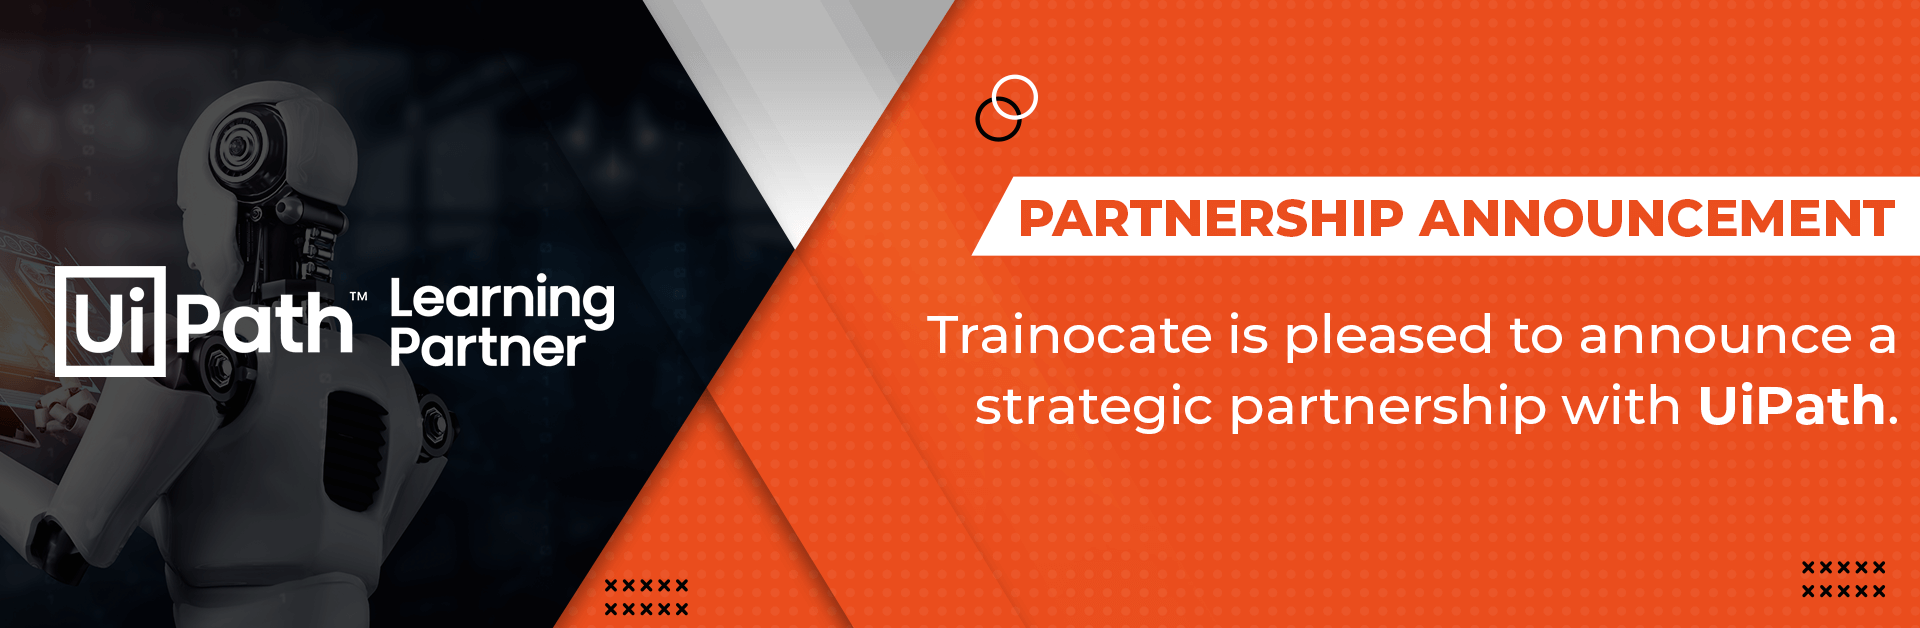 trainocate-partnership-announcement-banner.png